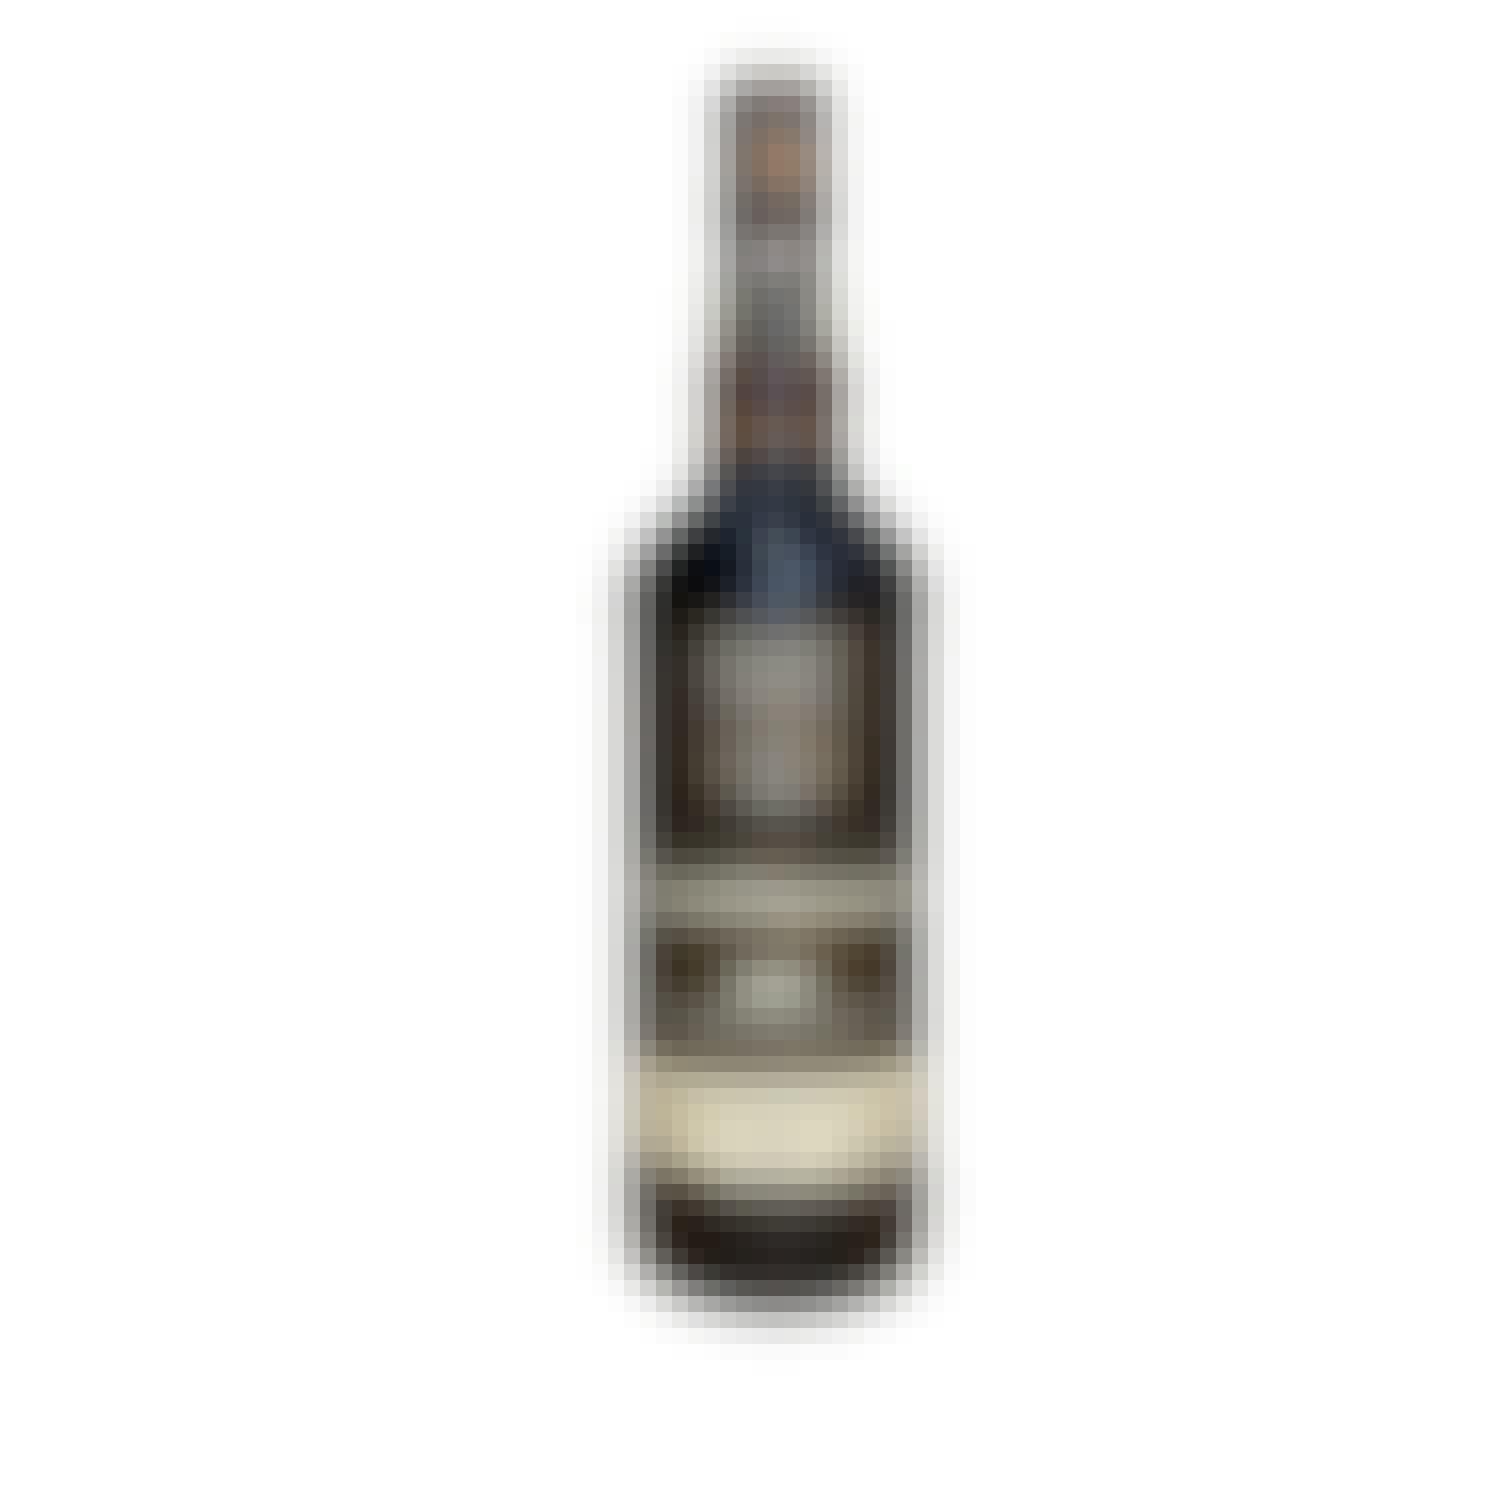 Glendronach Cask Strength Garden State Edition Scotch Whisky #2 27 year old 750ml